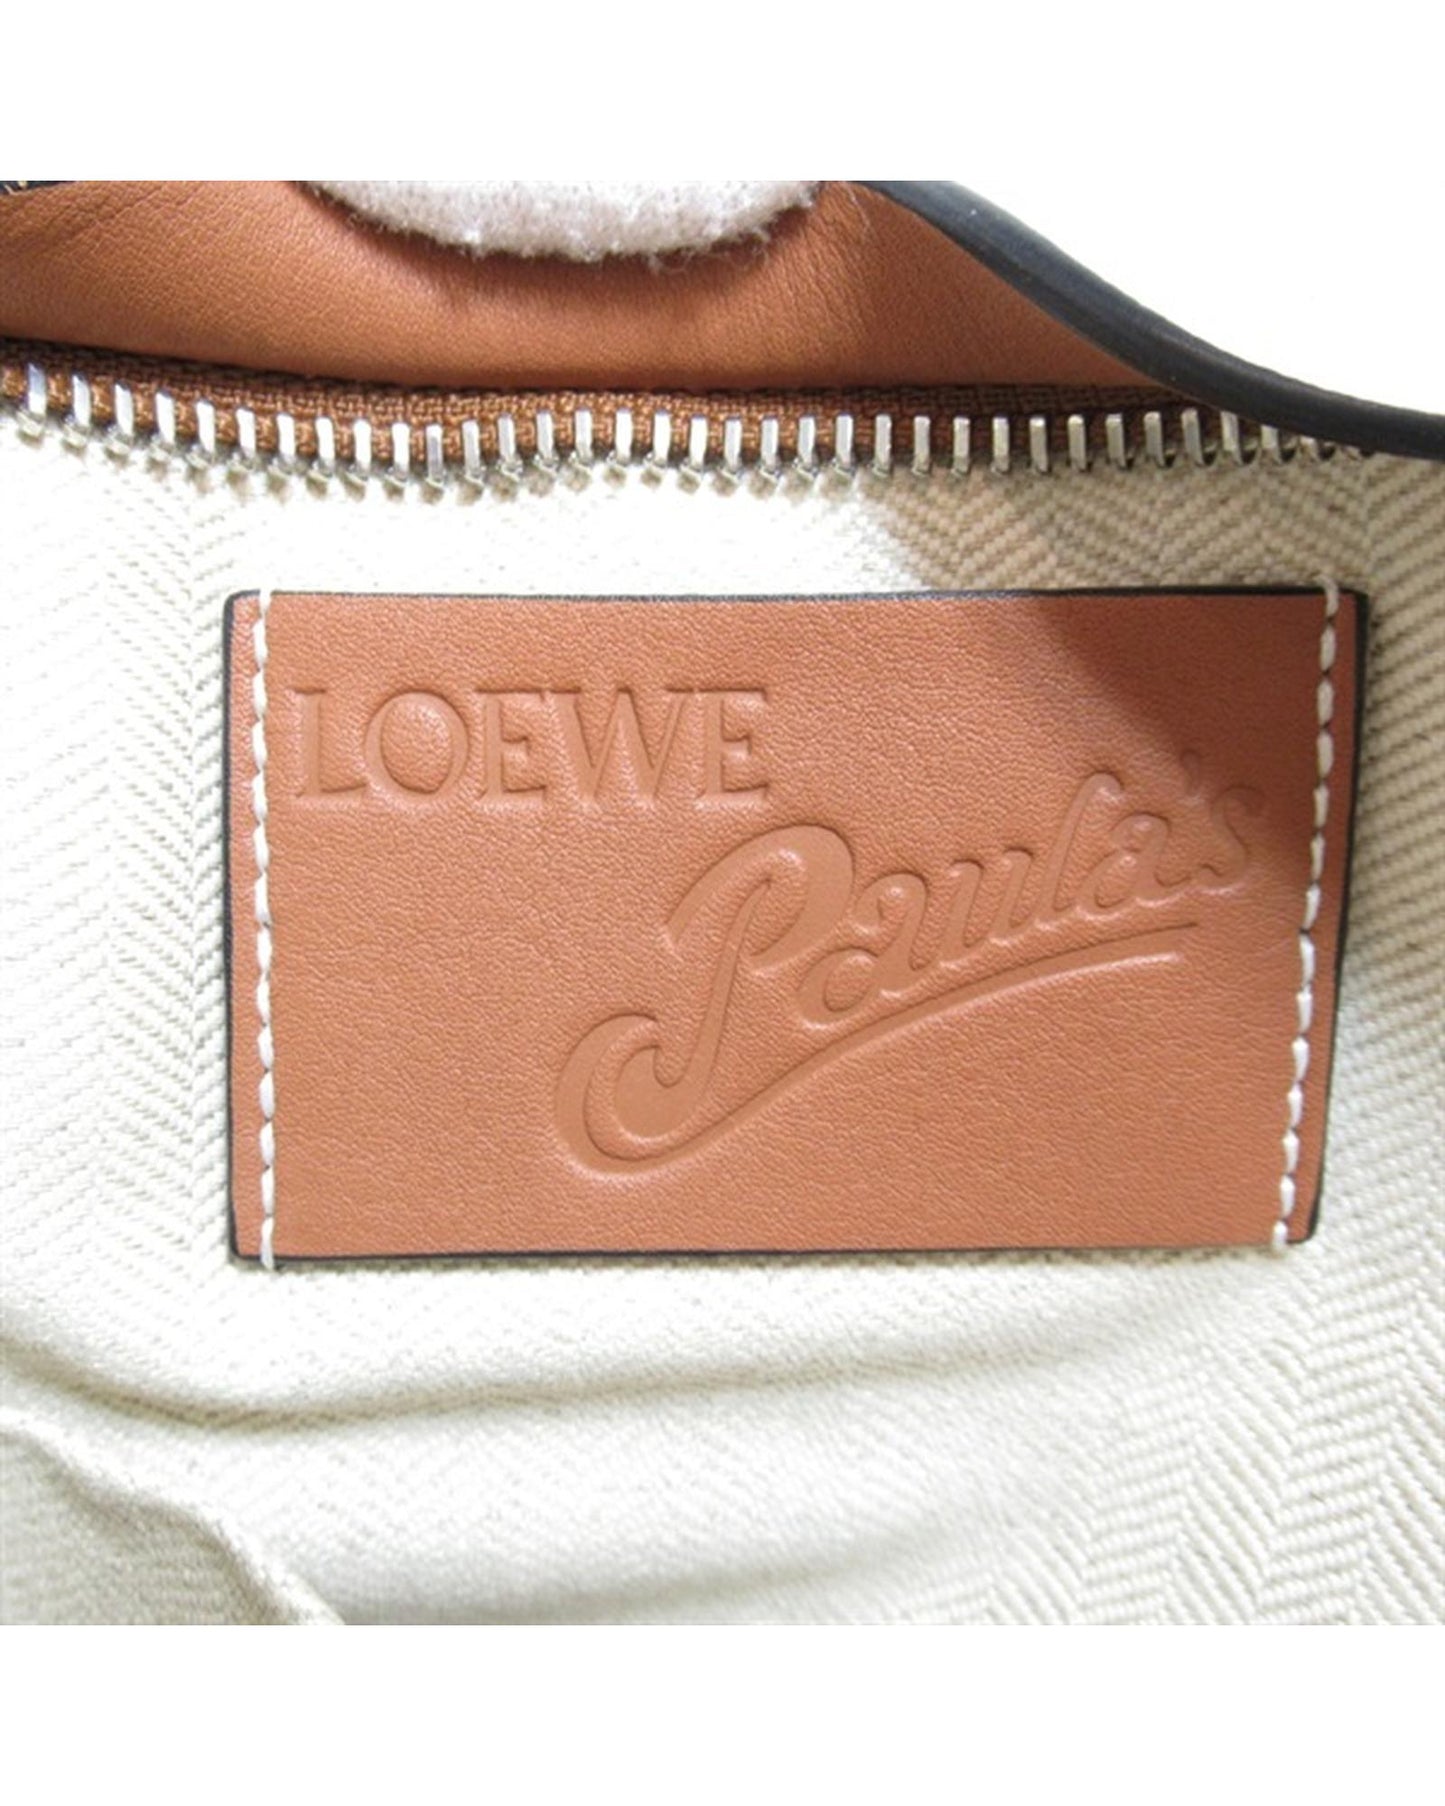 Loewe Women's Fringe Shoulder Bag with Boho Vibes in White